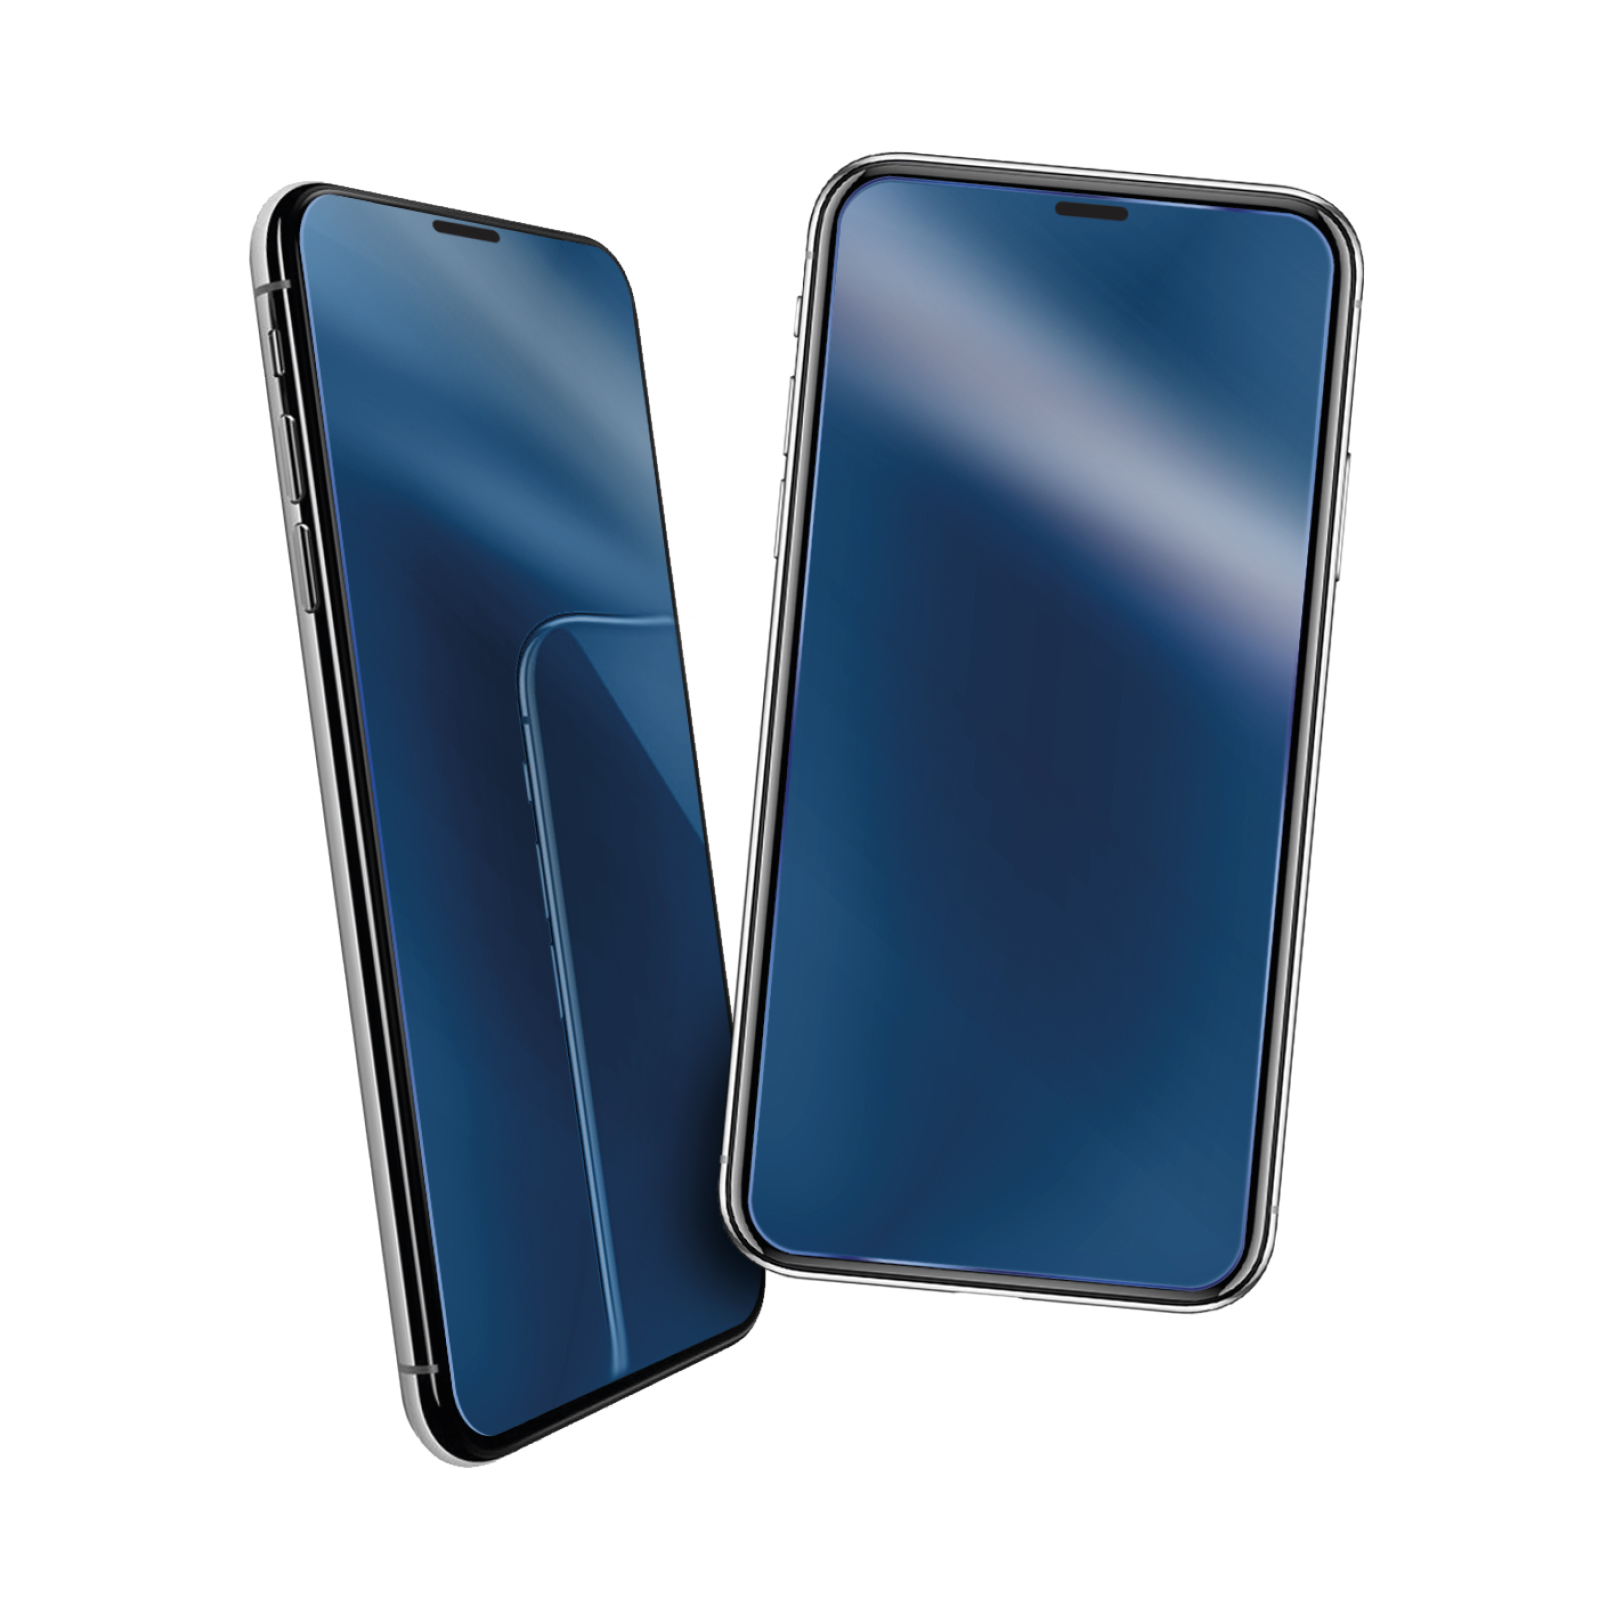 SBS - Tvrdené sklo Sunglasses pre iPhone 11 Pro/XS/X, modrá